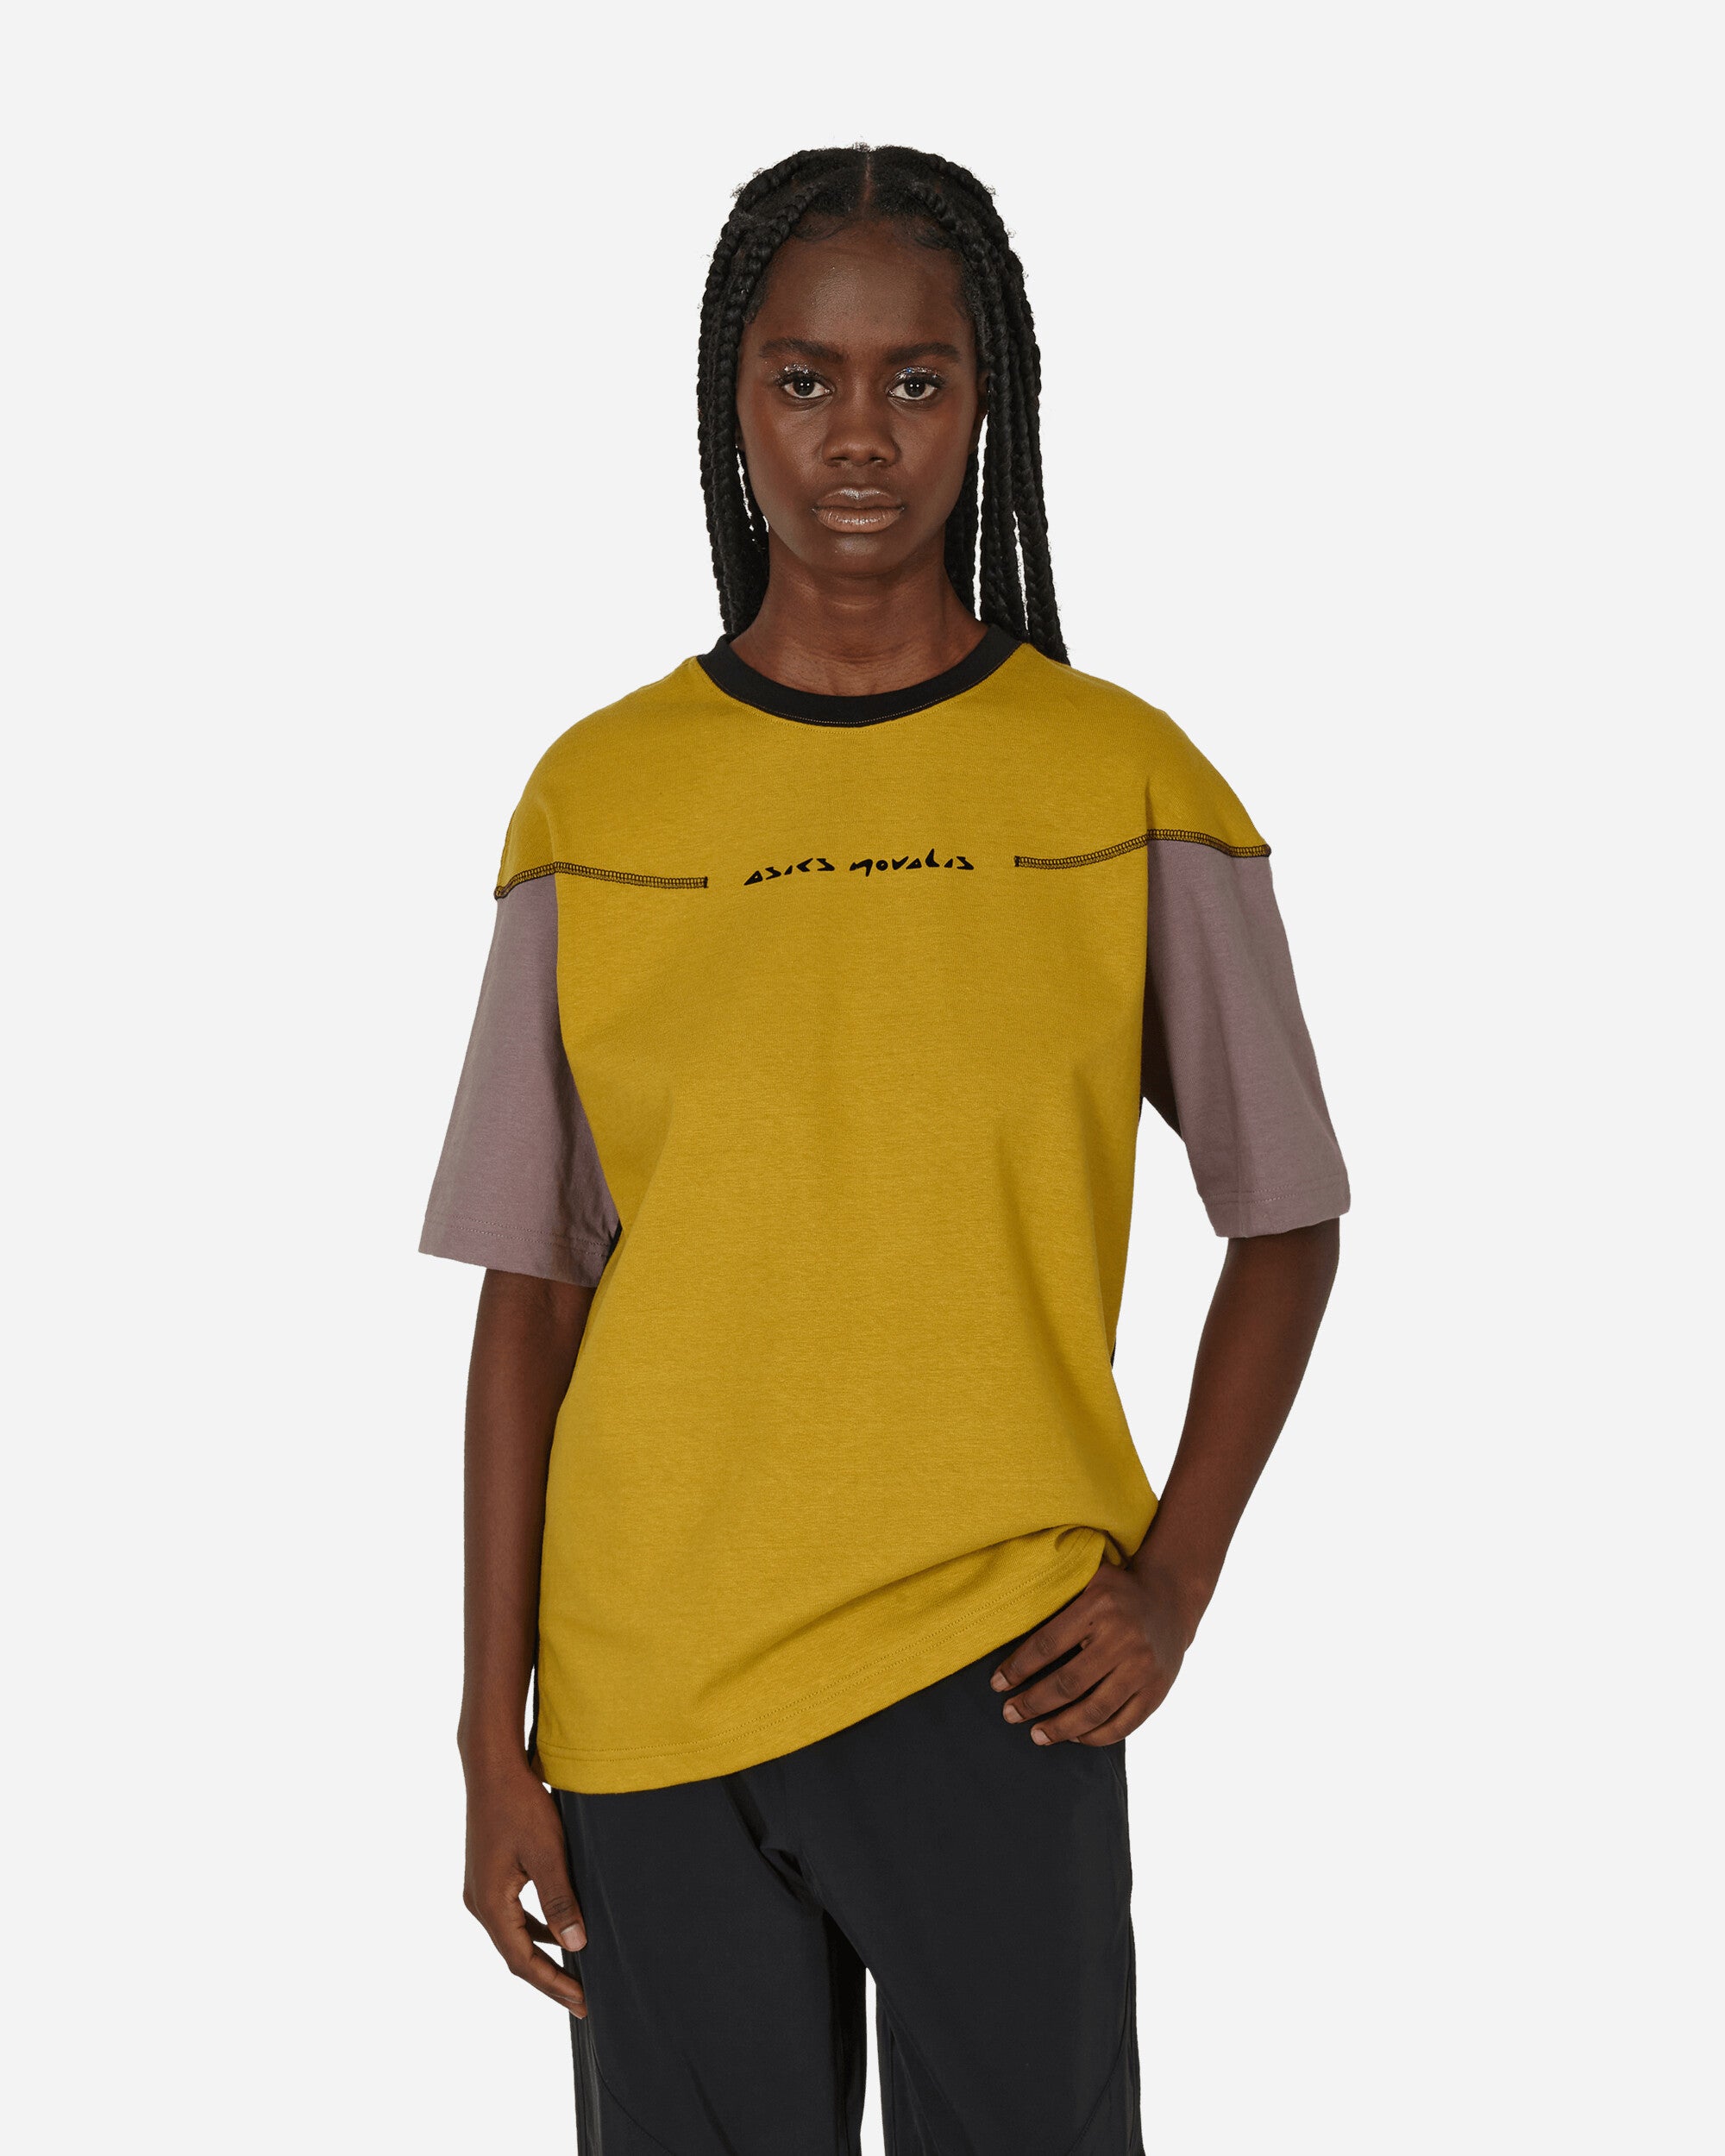 Novalis Bixance T-Shirt Medallion Yellow / Obsidian Black